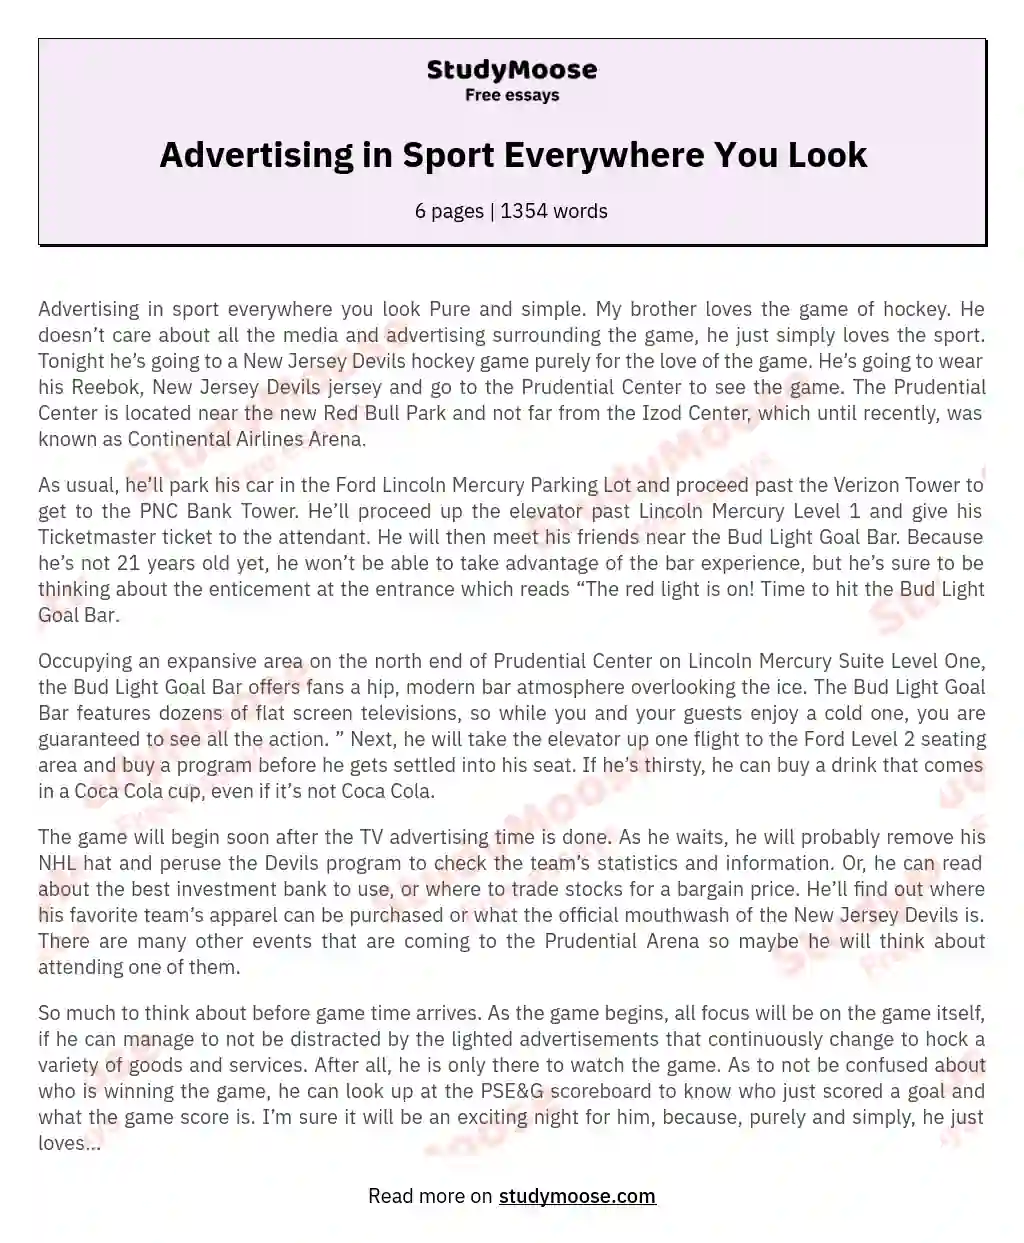 Advertising in Sport Everywhere You Look essay